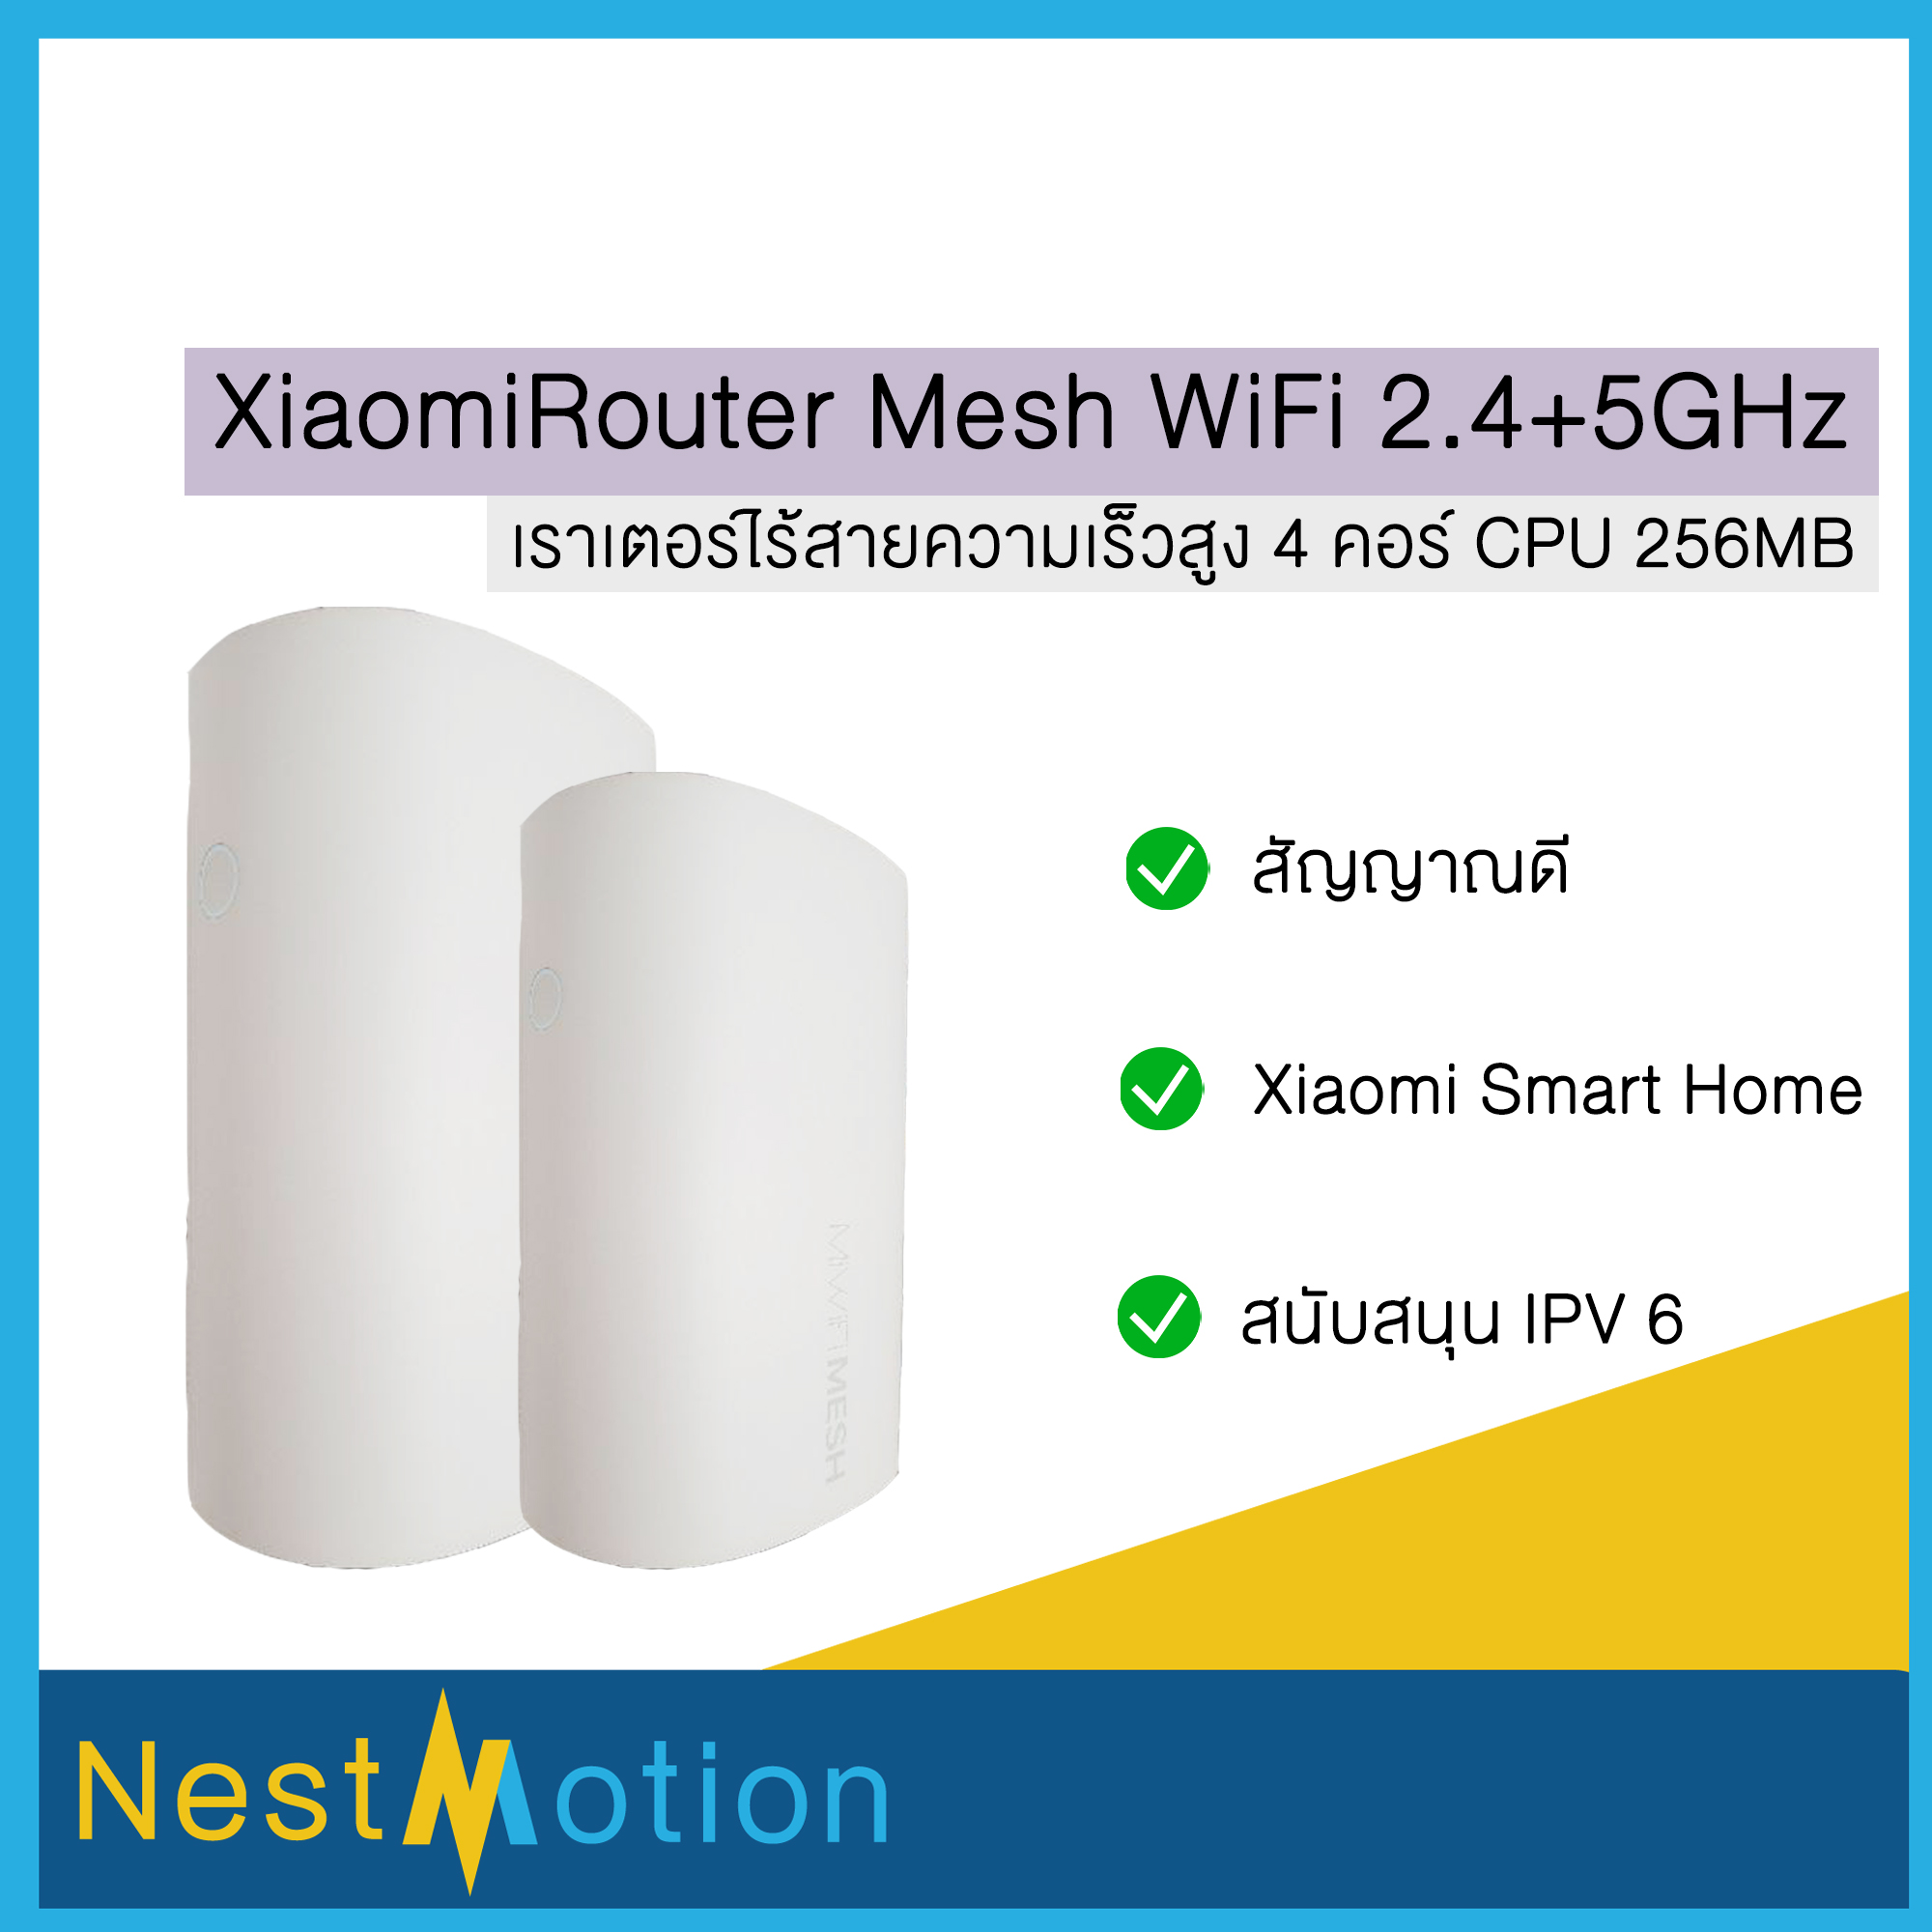 Xiaomi Mi Router Mesh WiFi 2.4+5GHz WiFi Router High Speed 4 Core CPU 256MB Gigabit Power 4 Signal Amplifiers for Smart